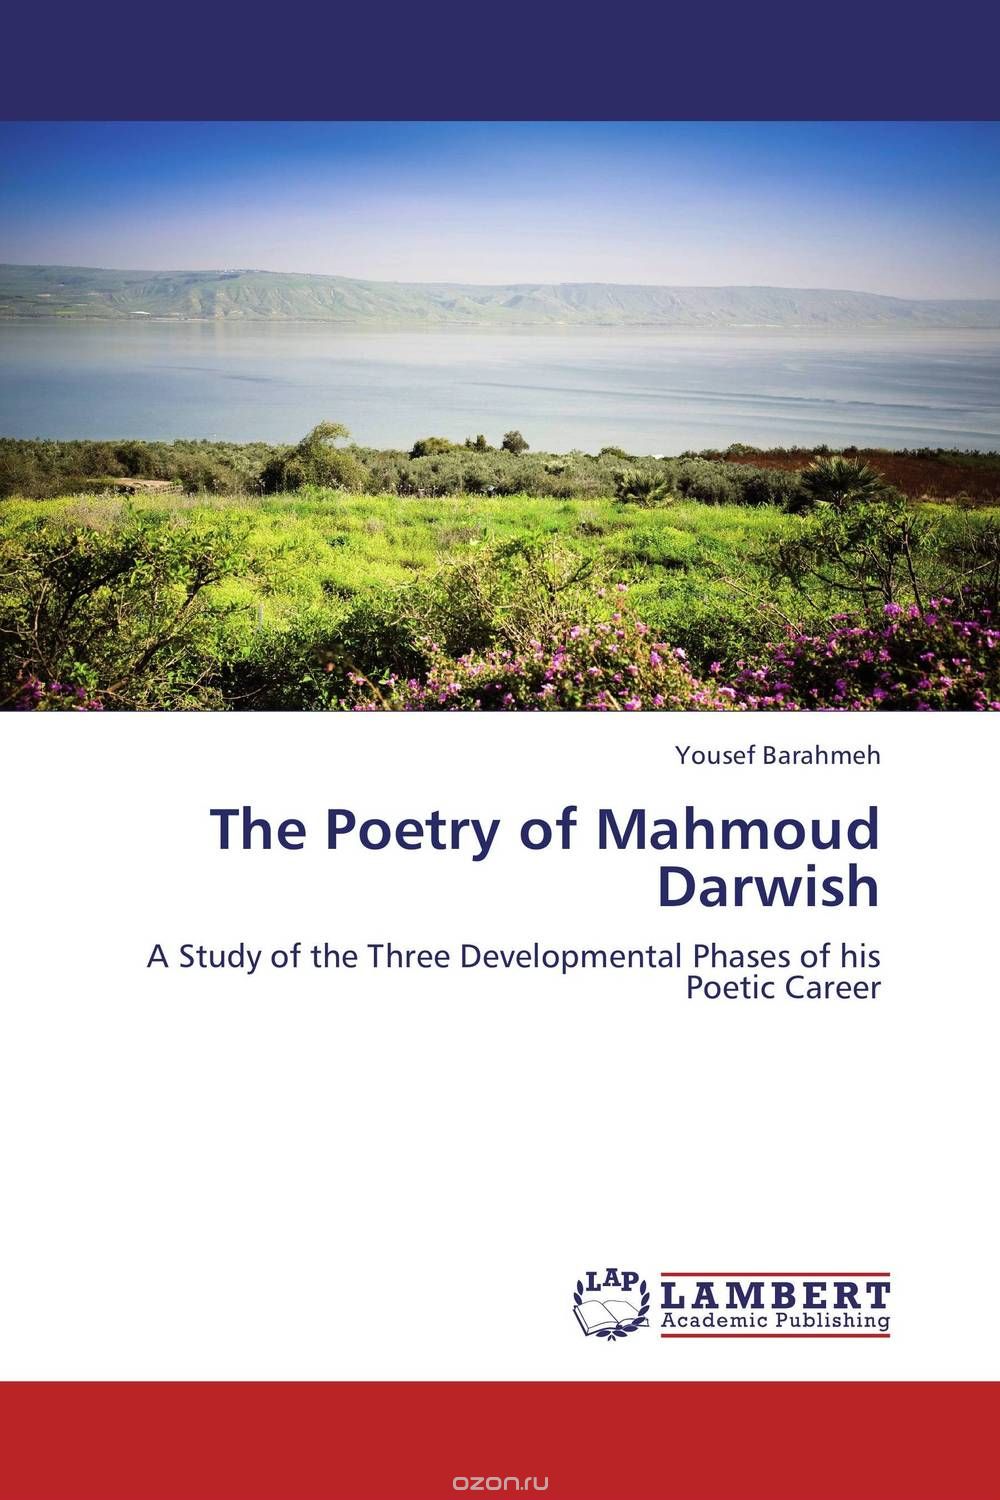 The Poetry of Mahmoud Darwish